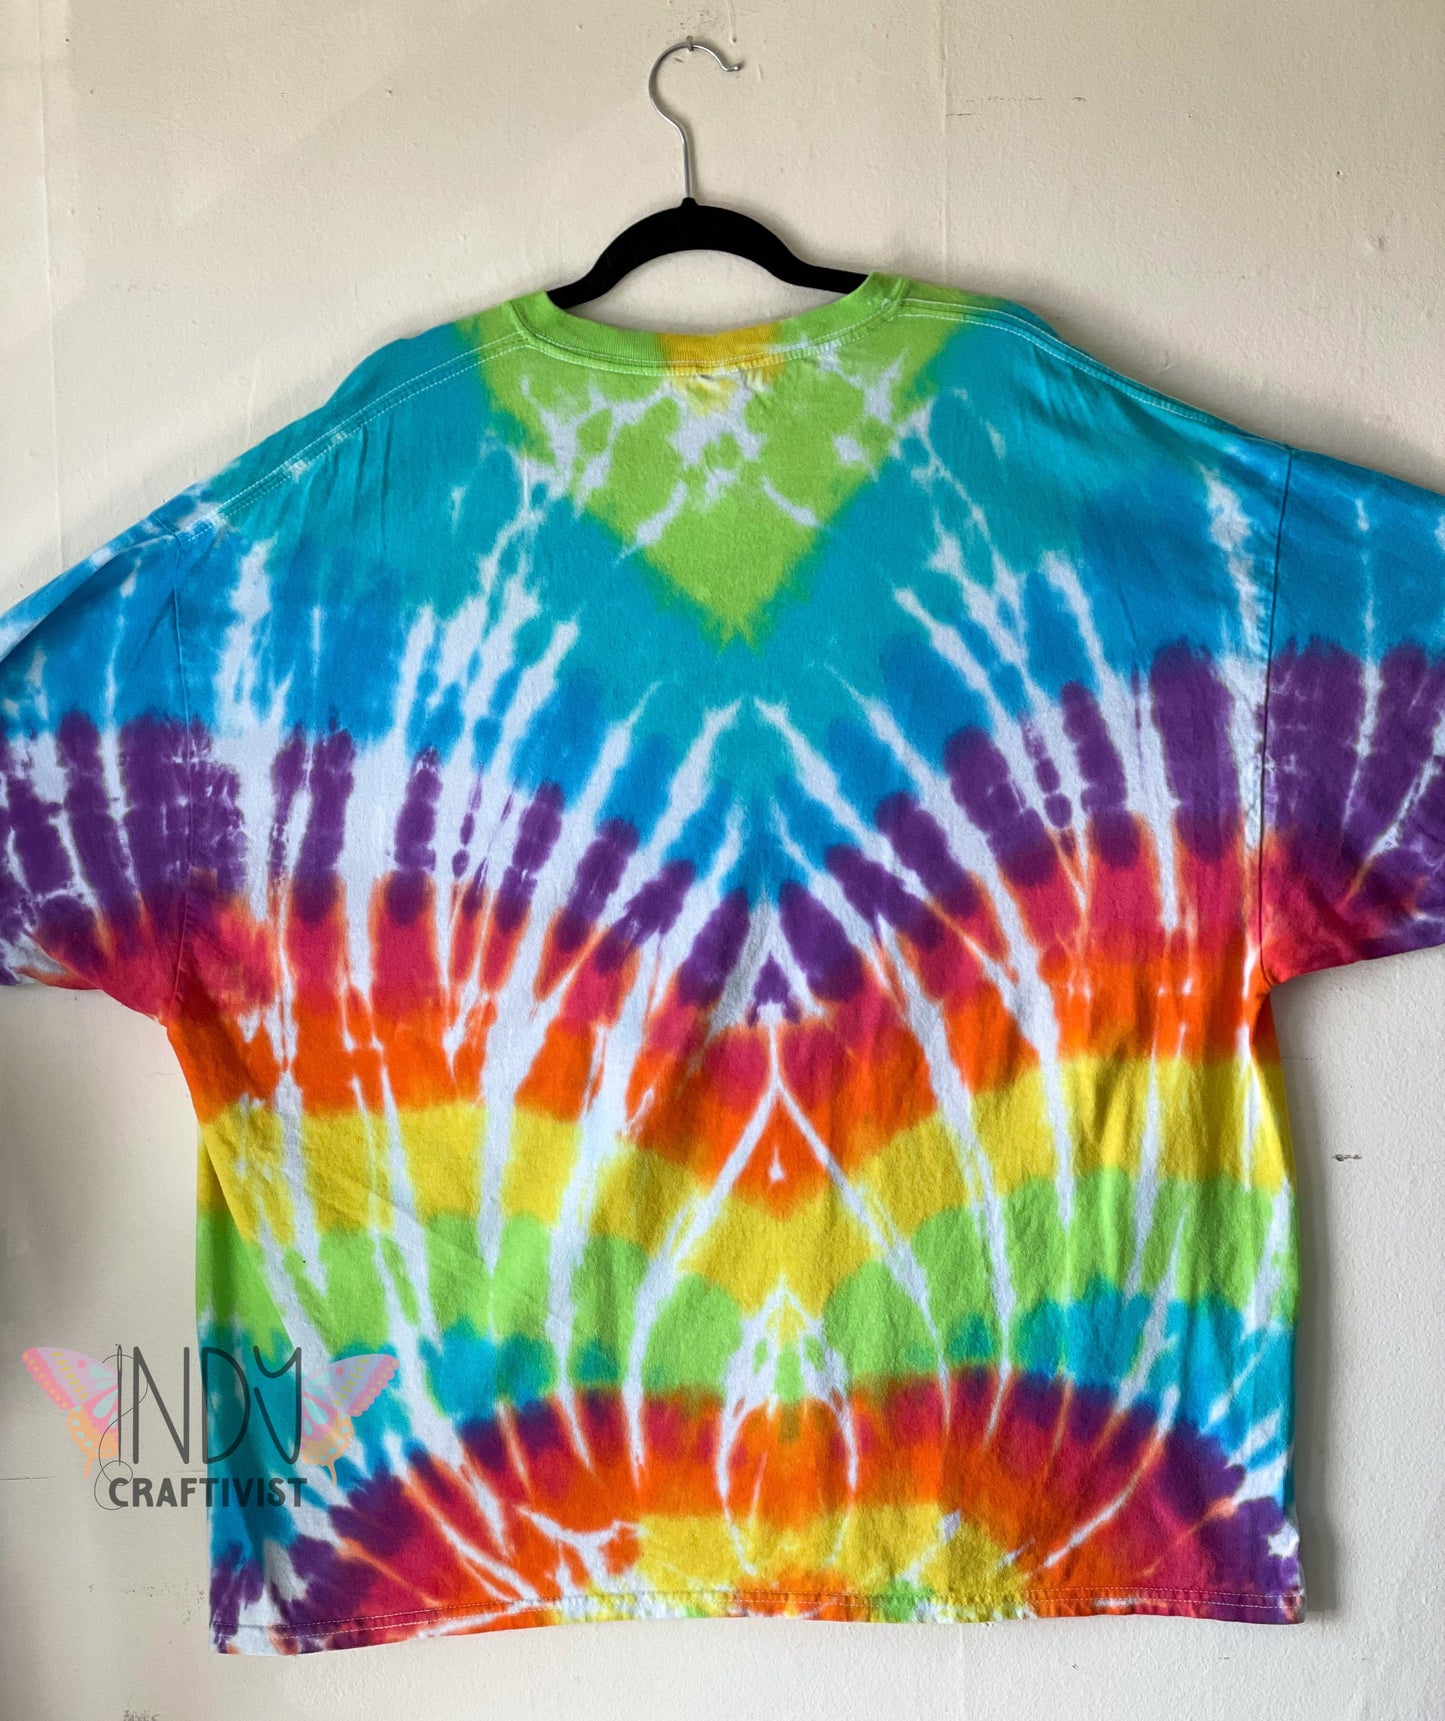 Rainbow 3X Tie Dye T-shirt